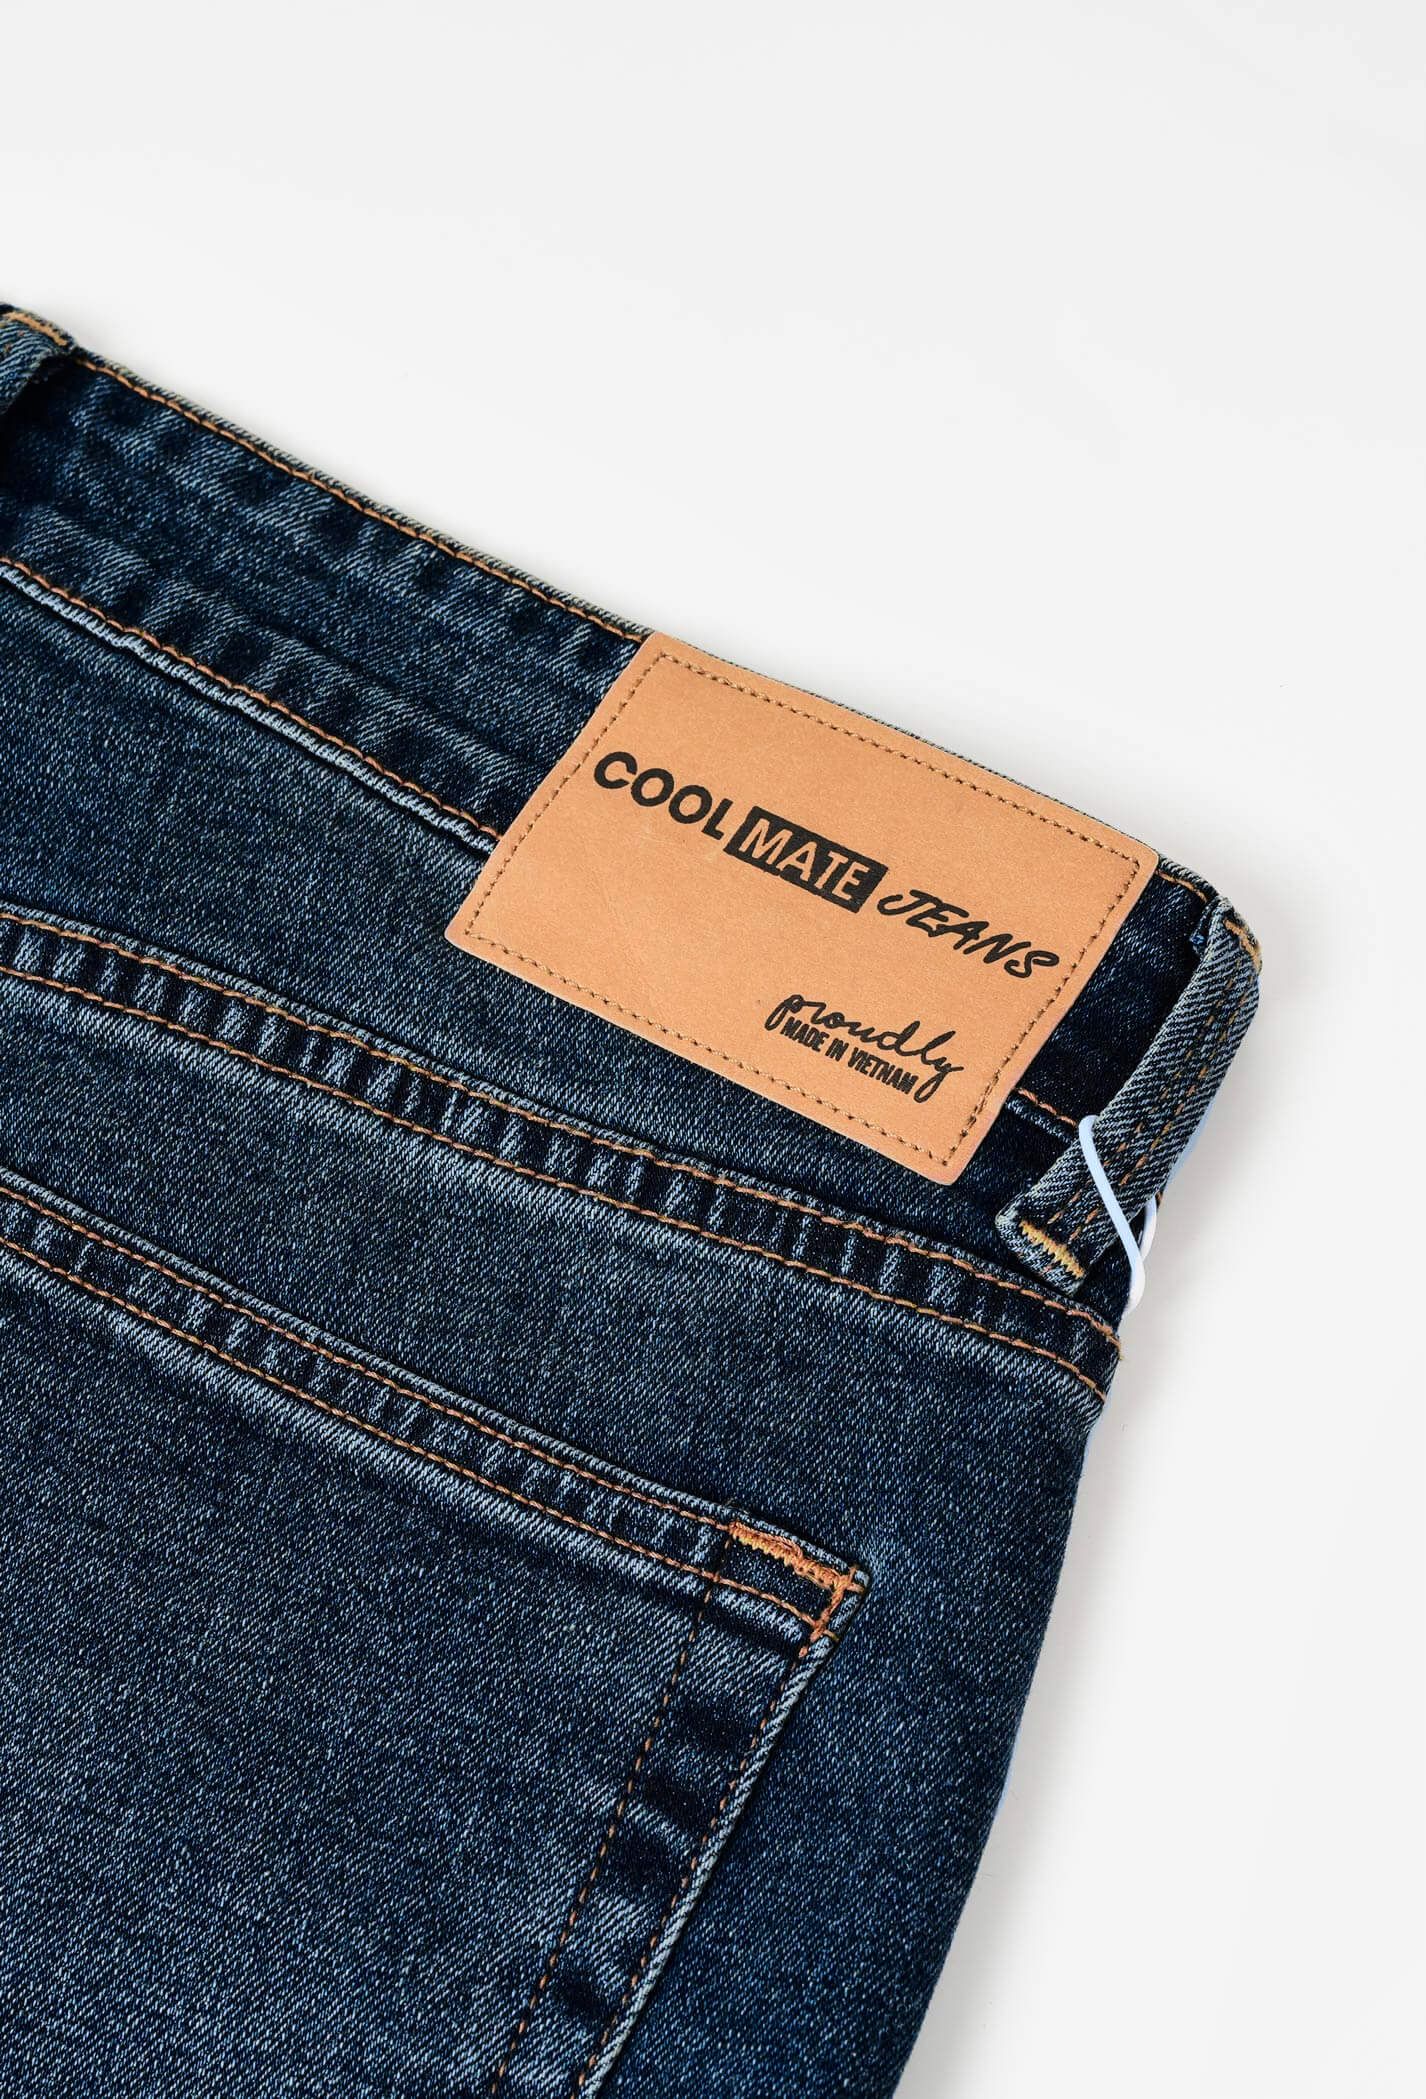 OUTLET - Quần Jeans Basic Slim V2 Xanh đậm 7